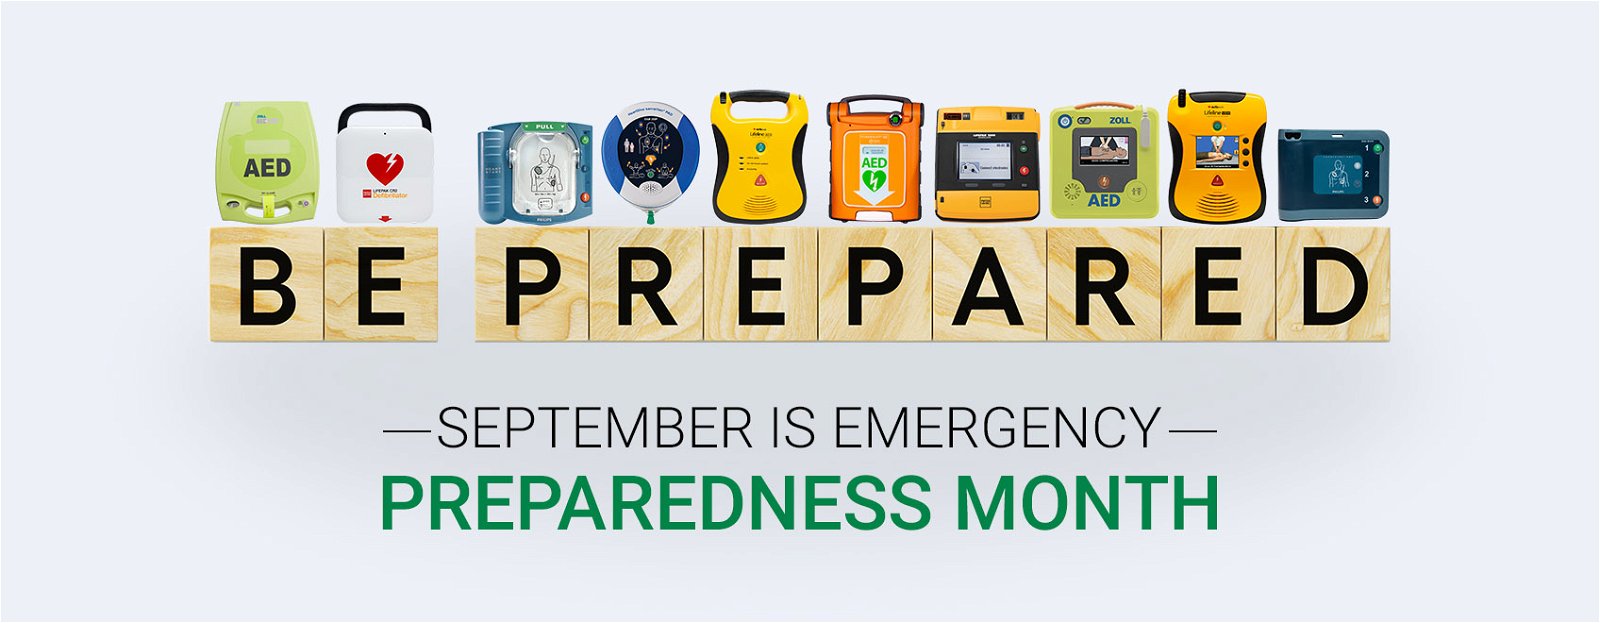 Buy AED Device - AED Defibrillators September is Emergency Preparedness Month